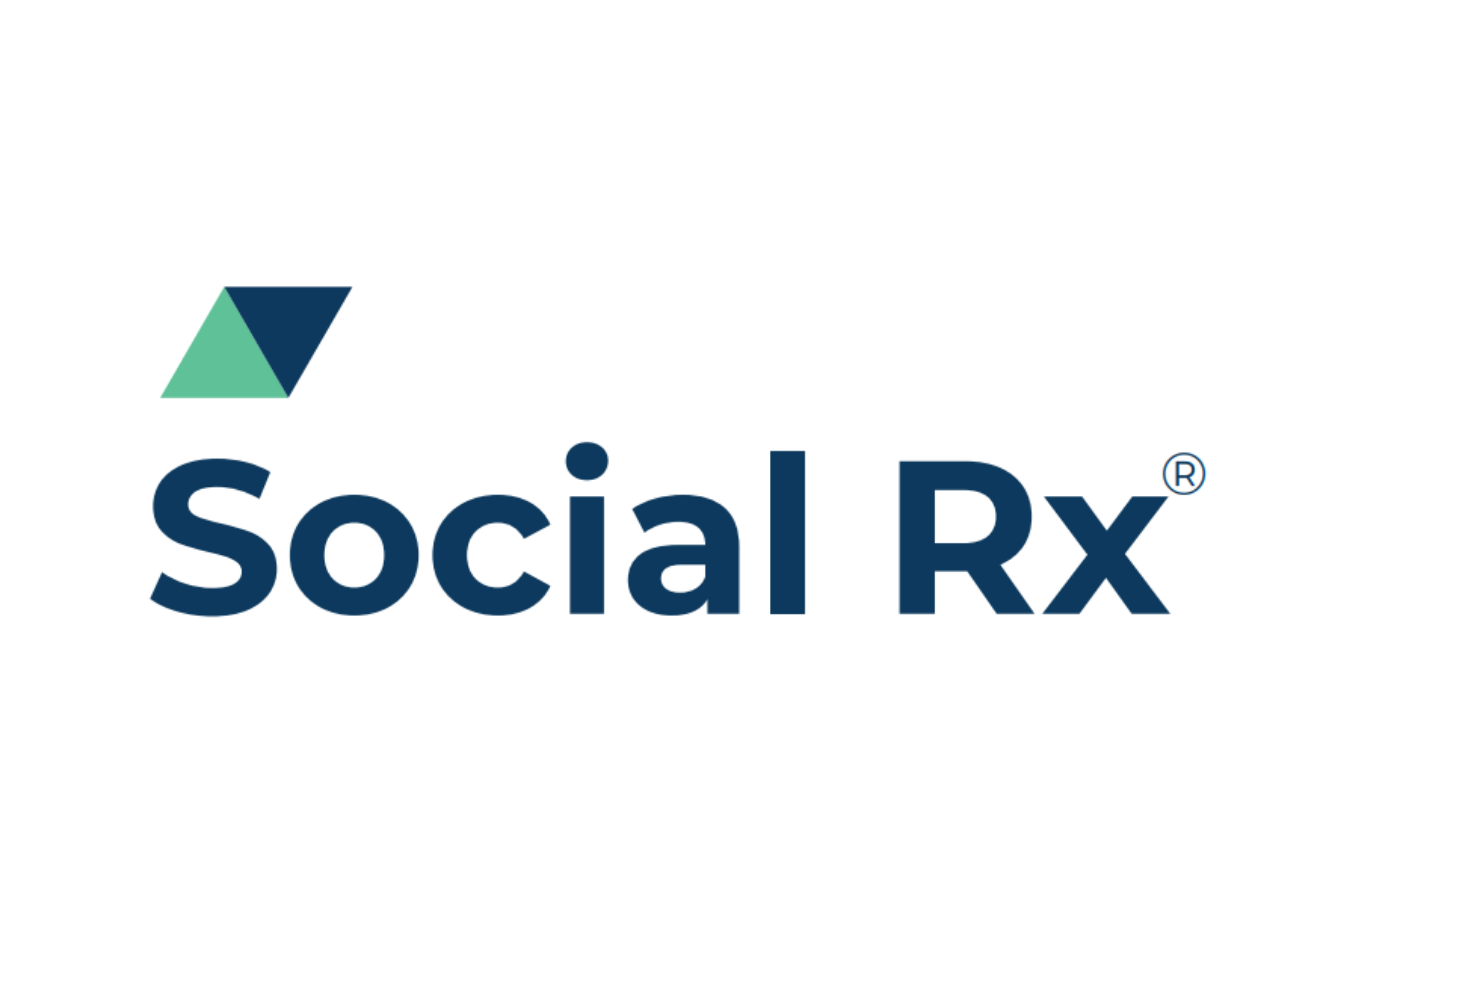 Social R X logo